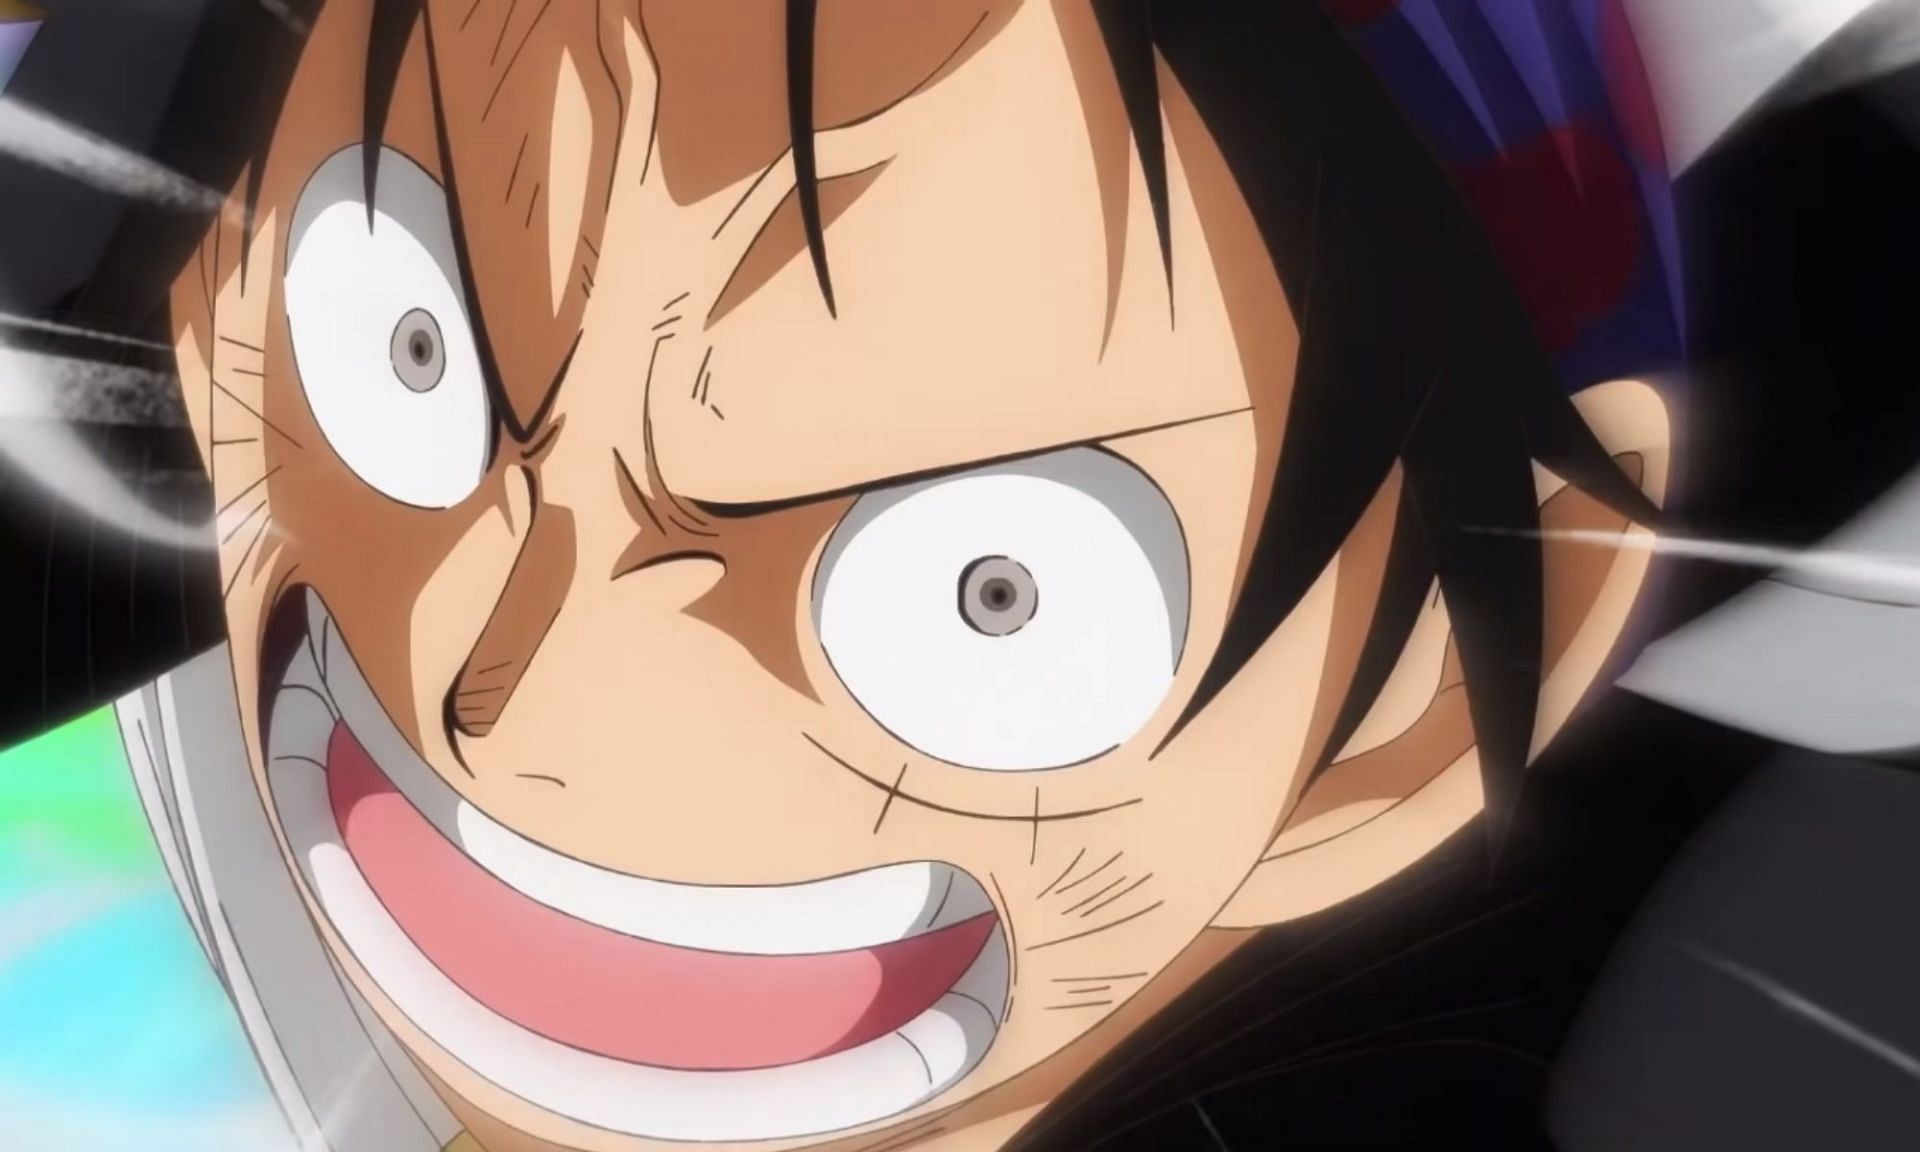 This will be the 15th One Piece movie (Image Credits: Eiichiro Oda/Shueisha, Viz Media, One Piece)